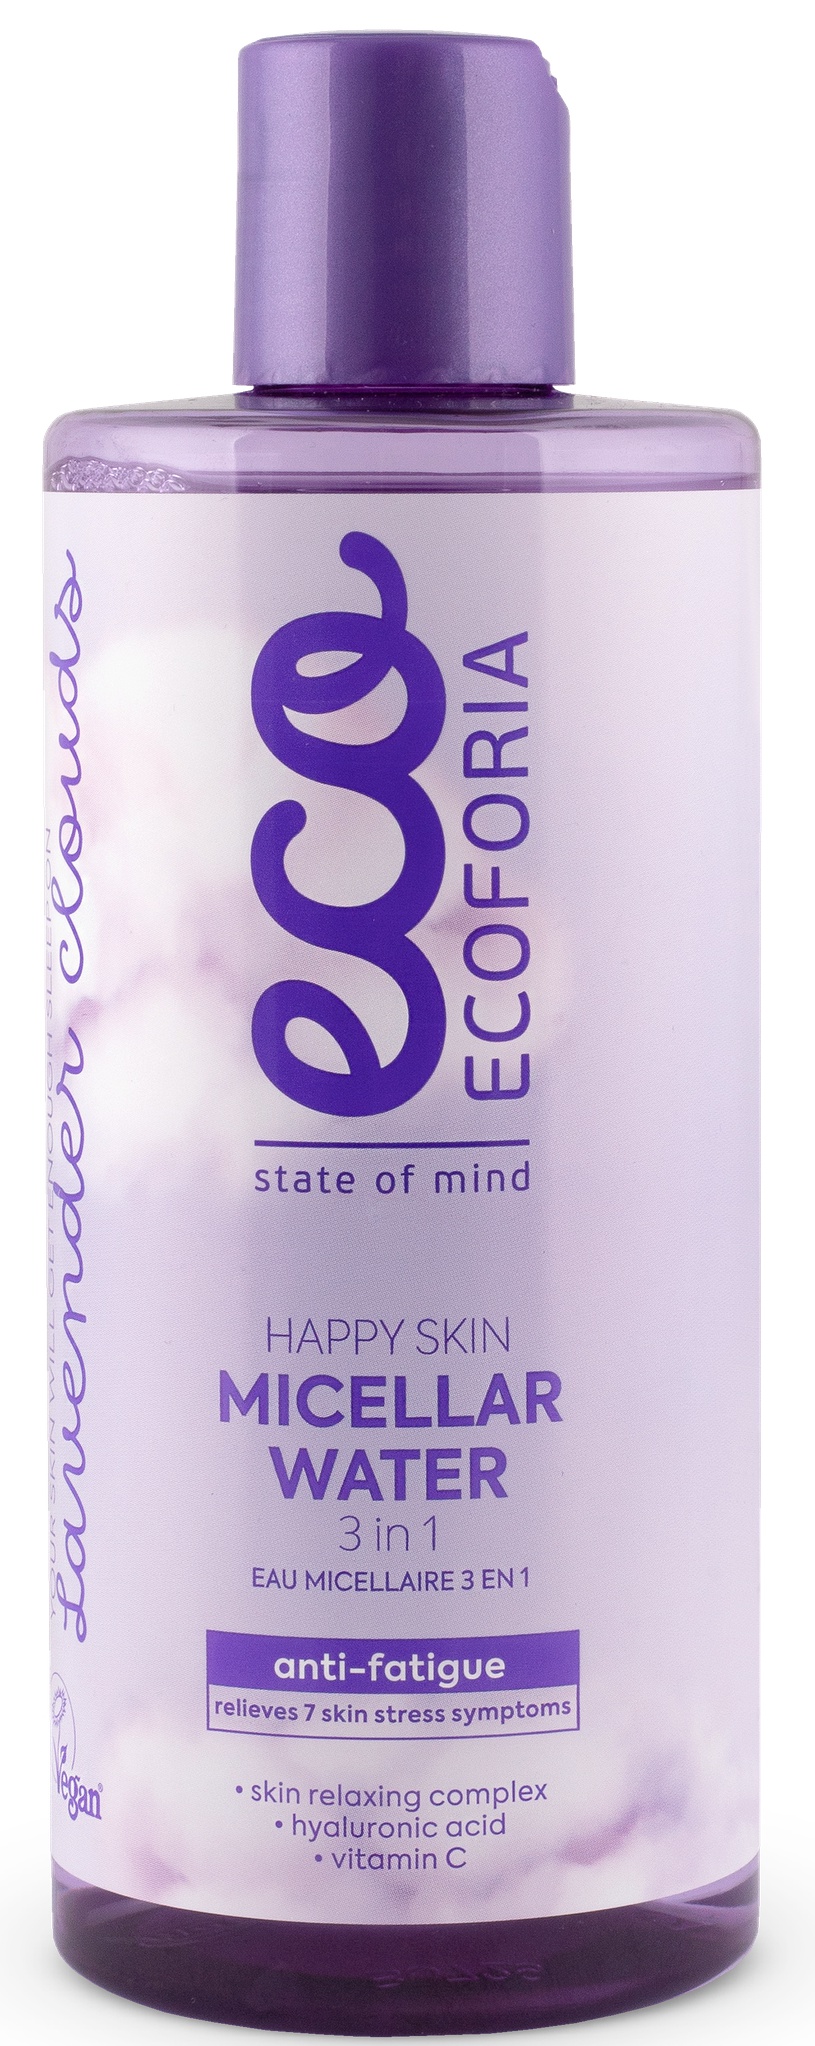 Ecoforia Happy Skin Micellar Water 3 in 1